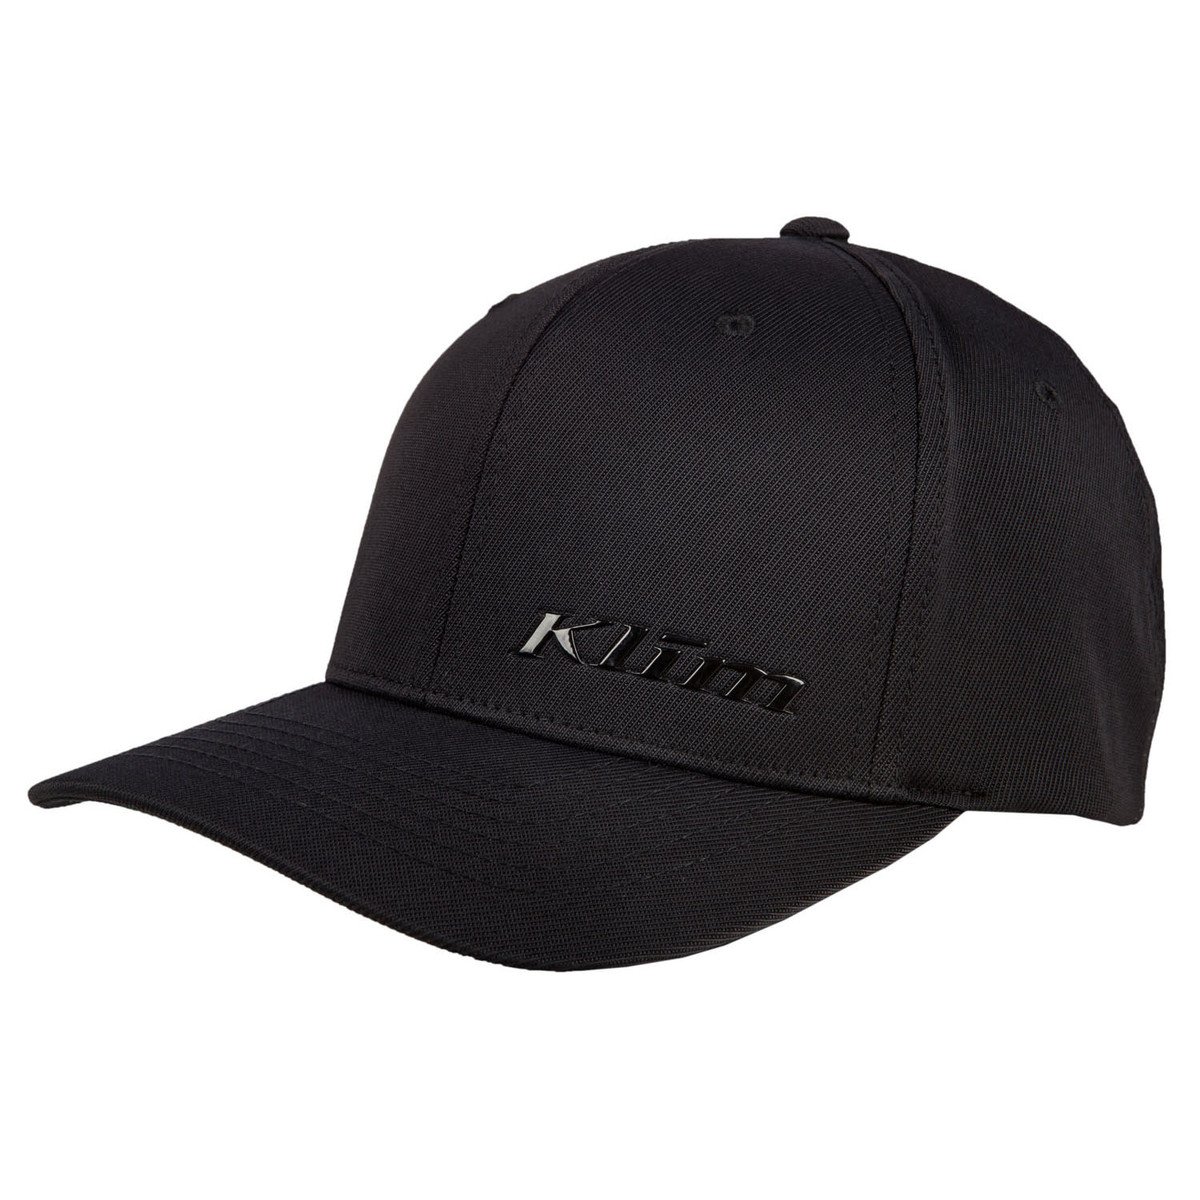 (Black) Klim Hat Fit Flex Stealth